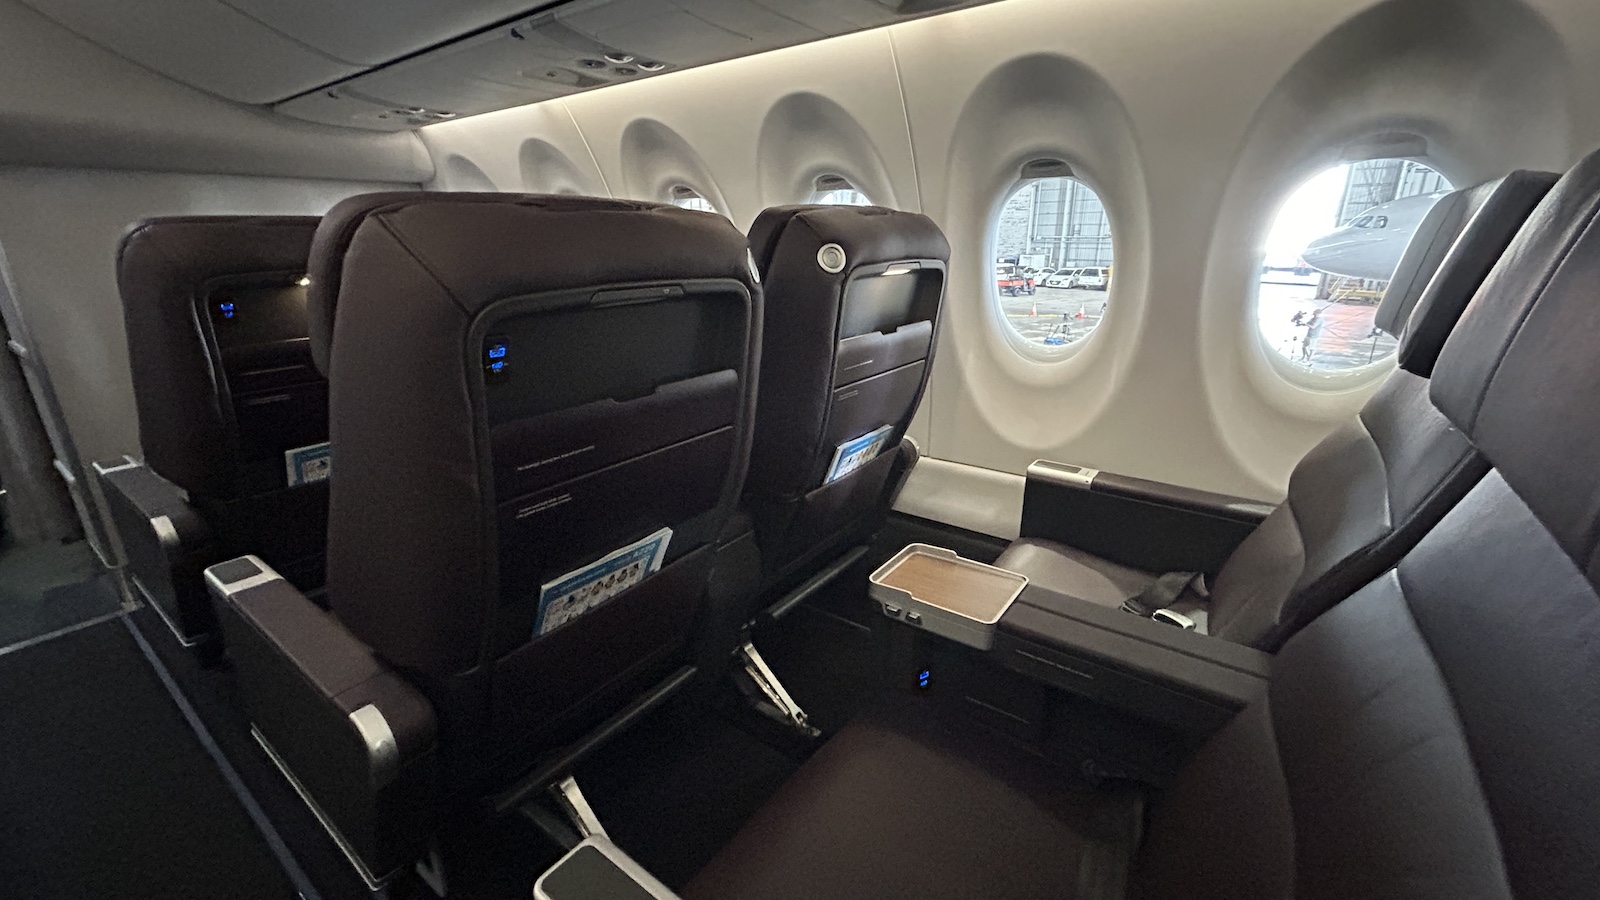 Qantaslink A220 Business Class Seats Rear View Angle Point Hacks by Daniel Sciberras